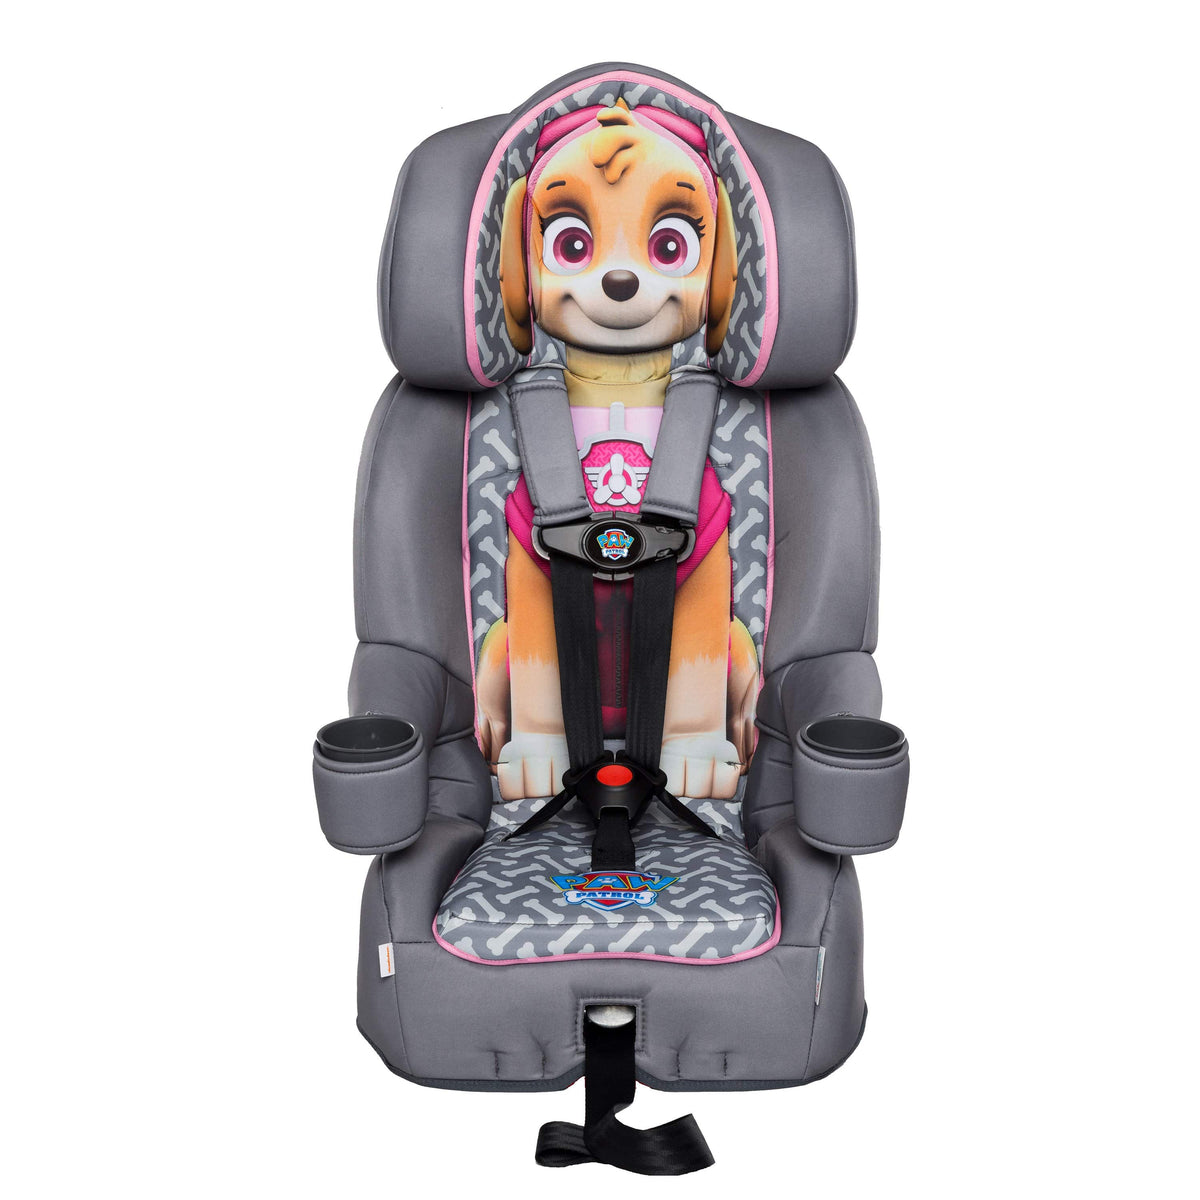 KidsEmbrace Combination Harness Booster Car Seat, Nickelodeon Paw Patrol Skye